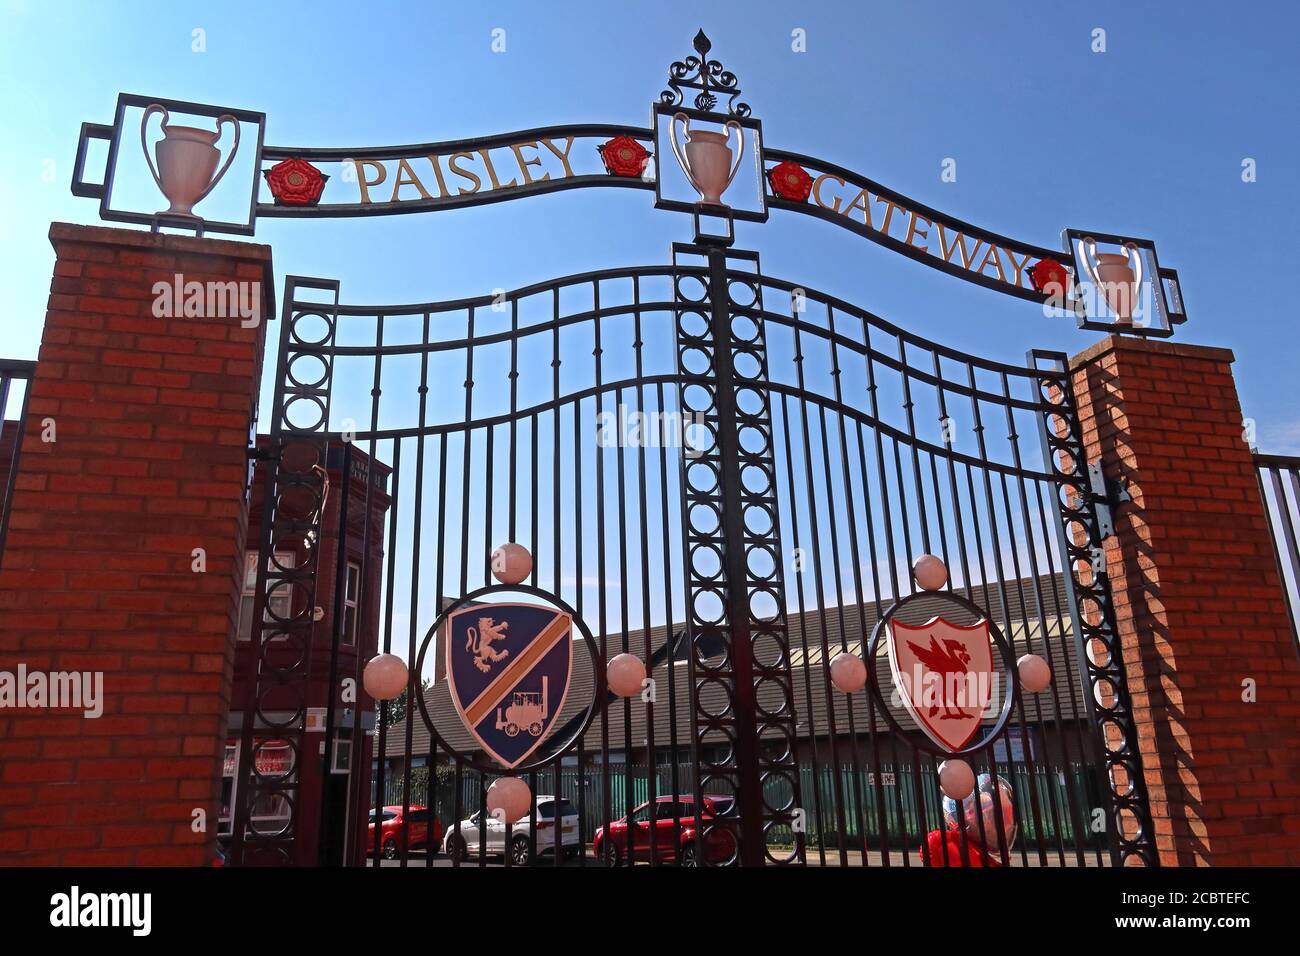 Bob Paisley Gateway gates, LFC,Liverpool Football Club, Anfield, Premier League, Merseyside,North West England, UK, L4 2UZ Stock Photo